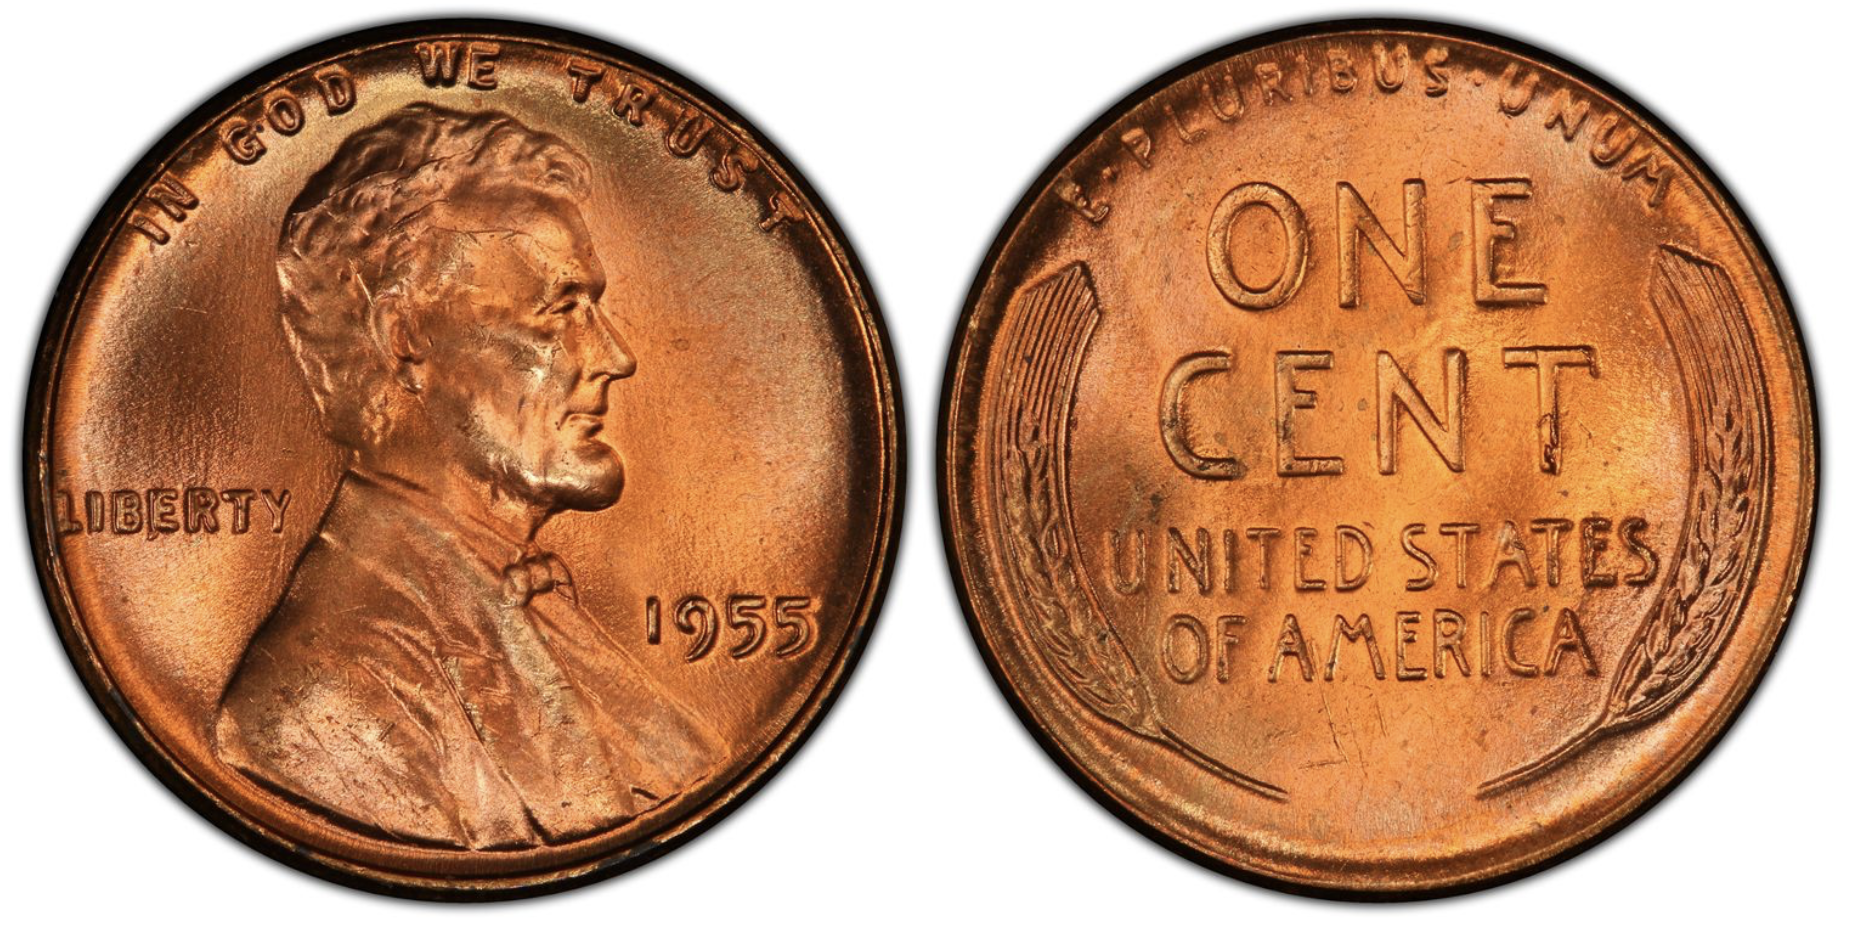 1955 wheat penny value